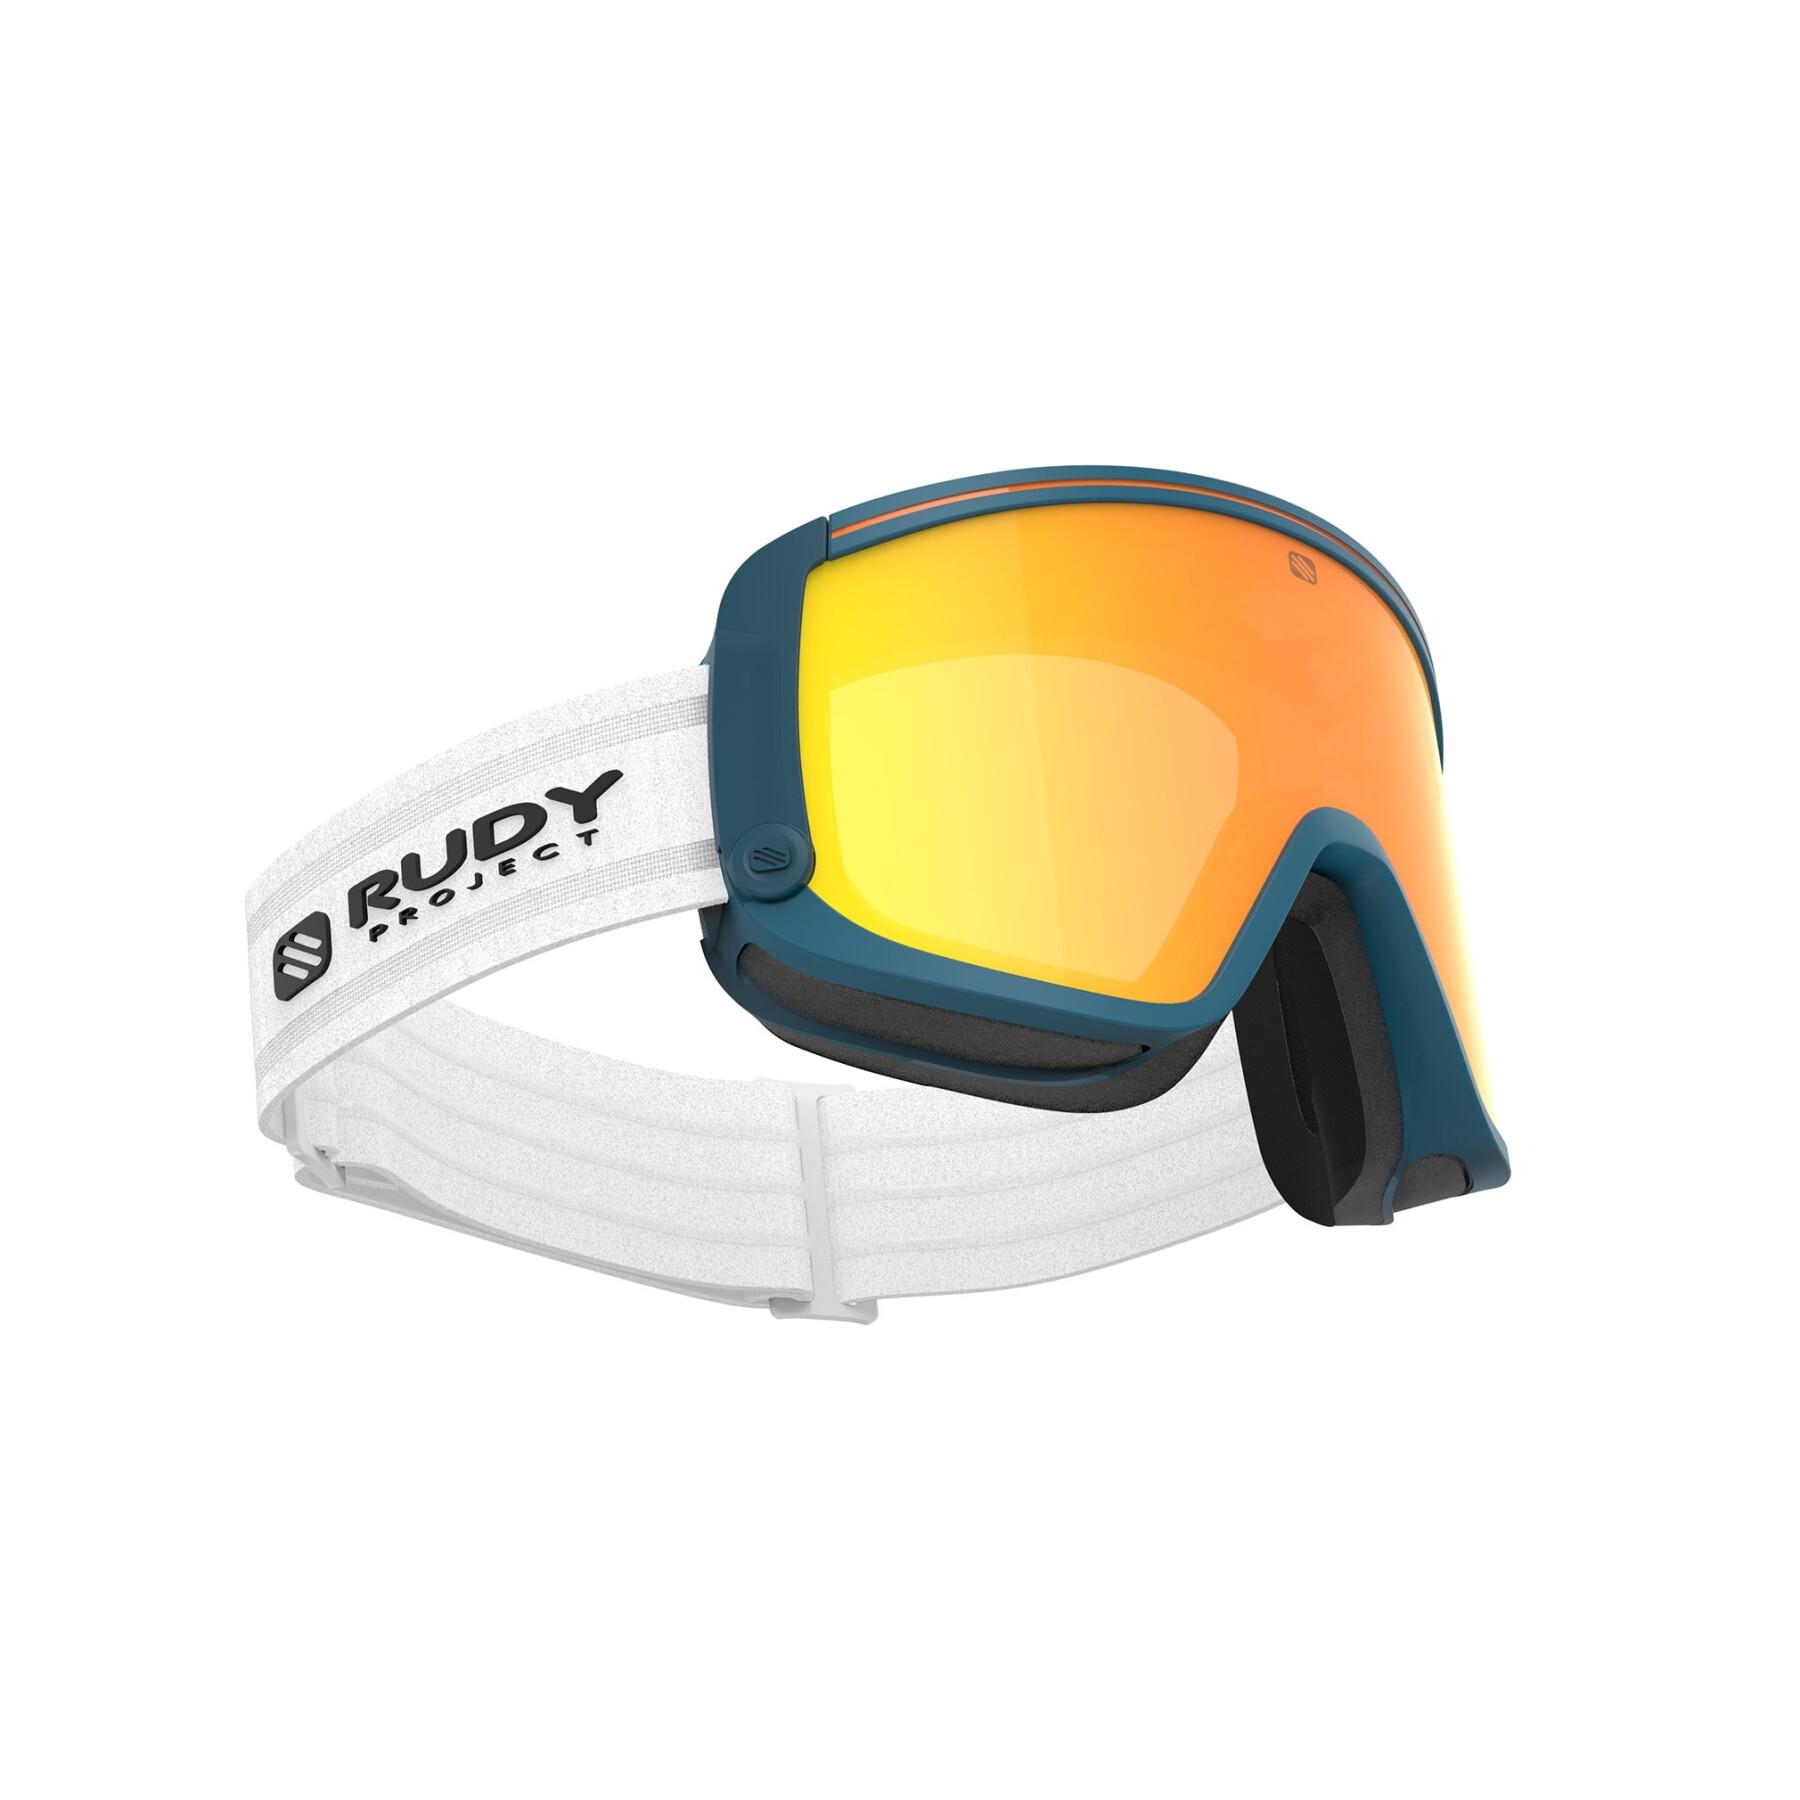 Masque de ski Rudy Project Spincut Optics Multilaser